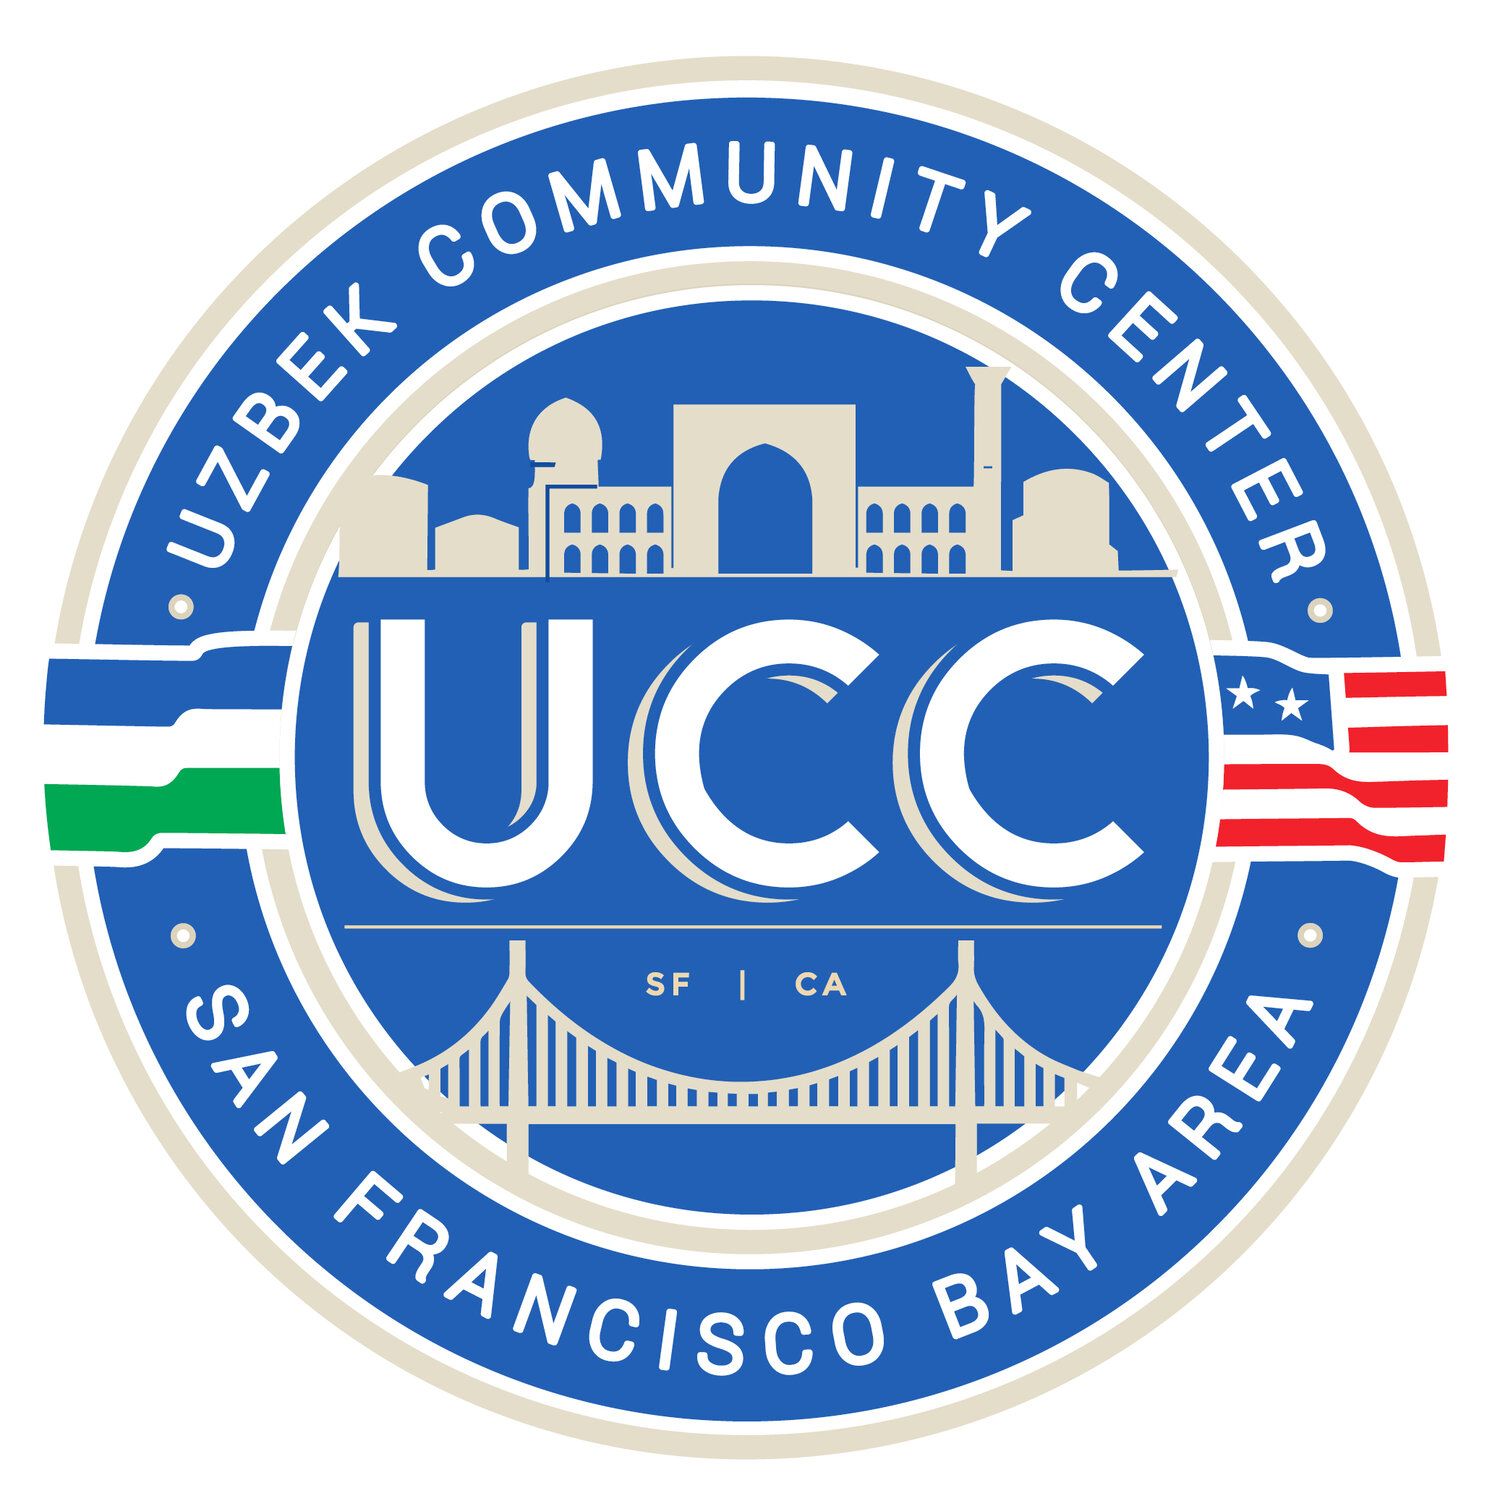 Uzbek Organization in San Francisco California - Uzbek Community Center of San Francisco Bay Area